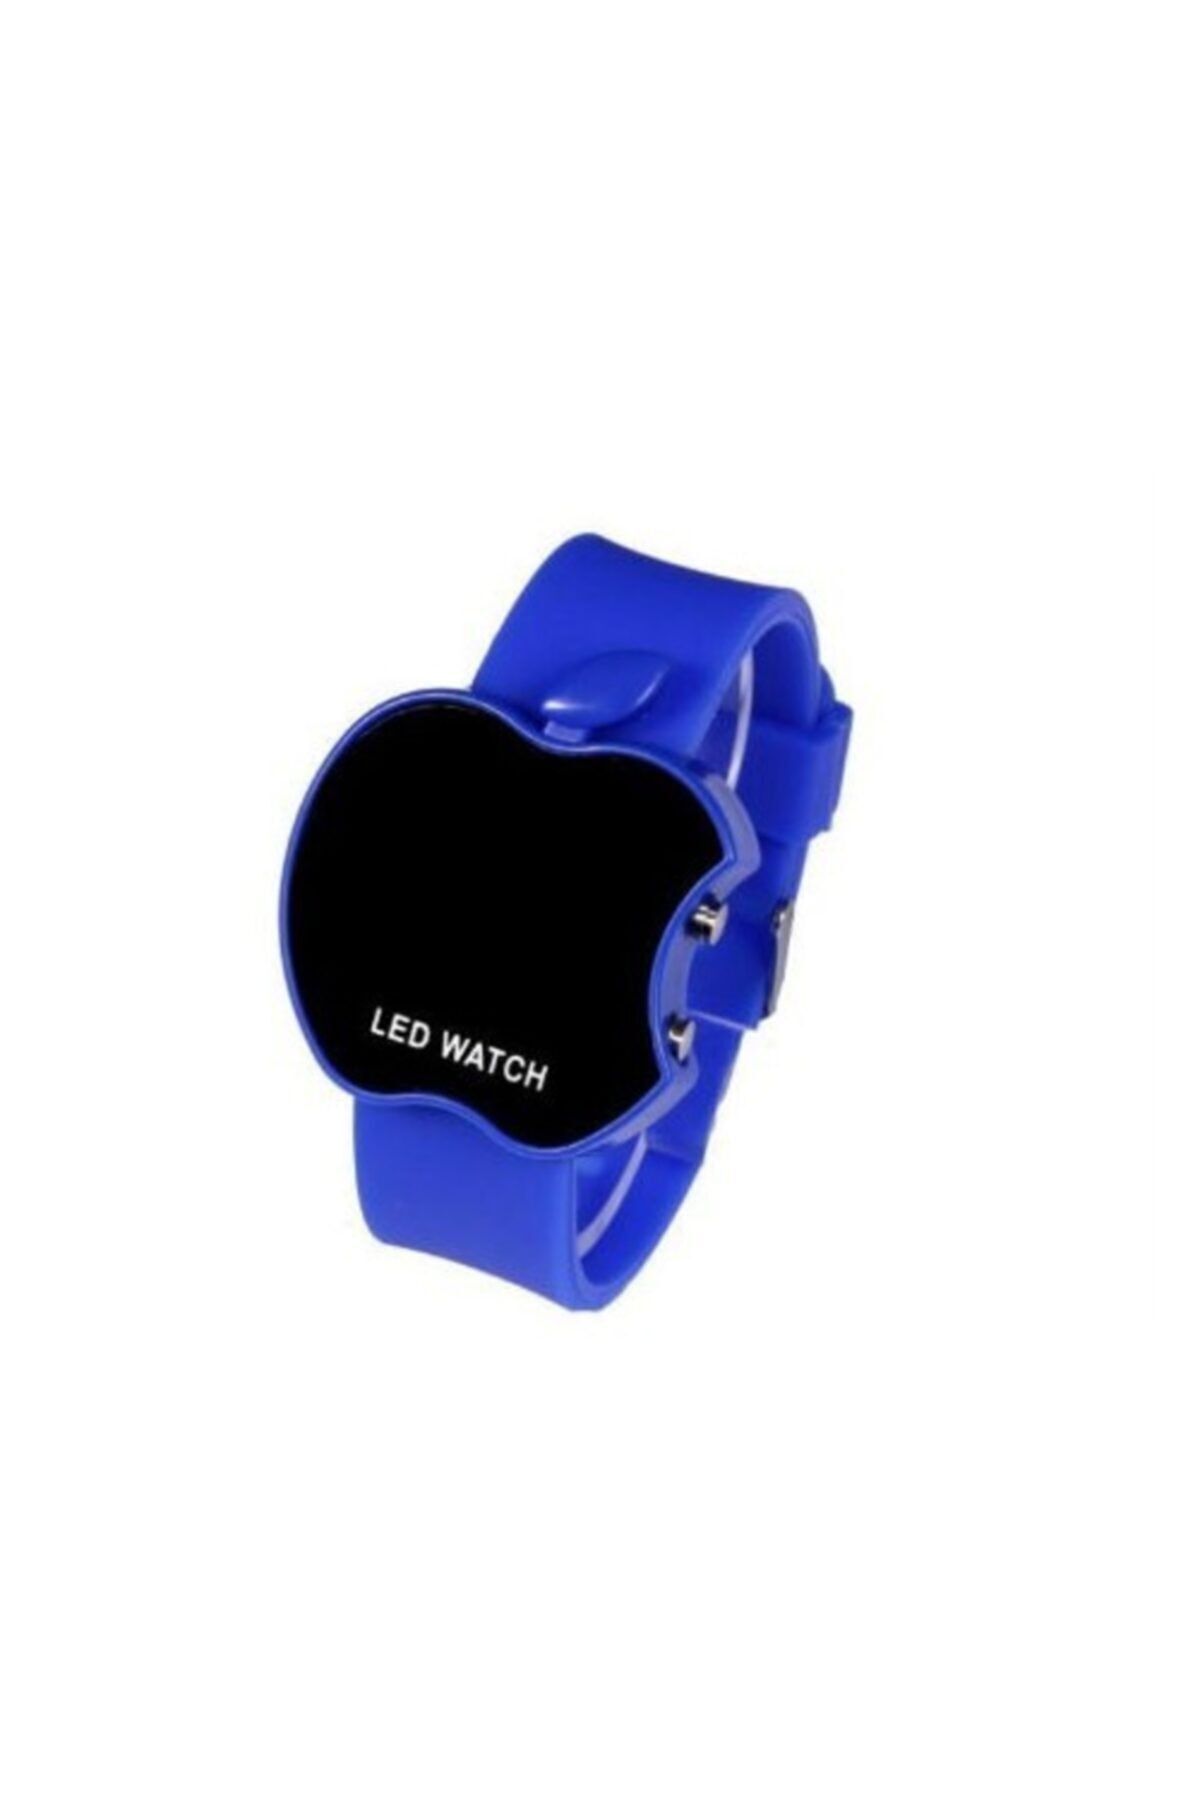 cumboo Elma Şeklinde Dijital Led Bileklik Kol Saati - Mavi Led Watch